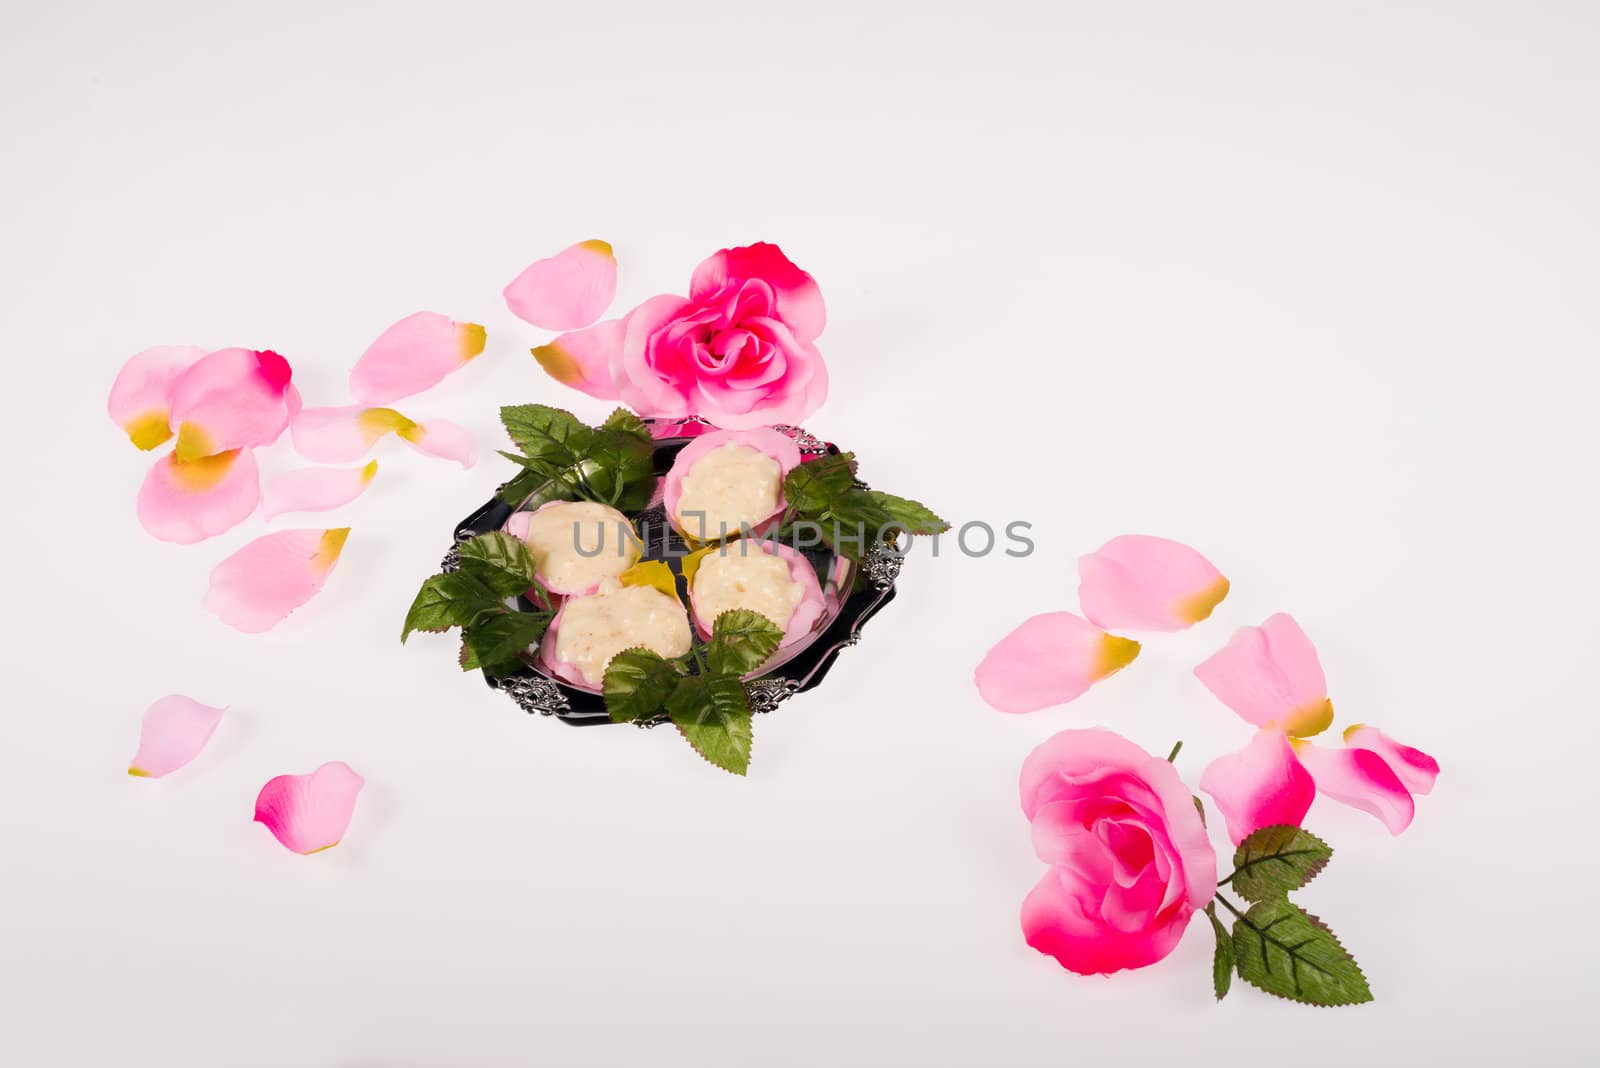 A sweet treat inside rose petals, a Valentines concept